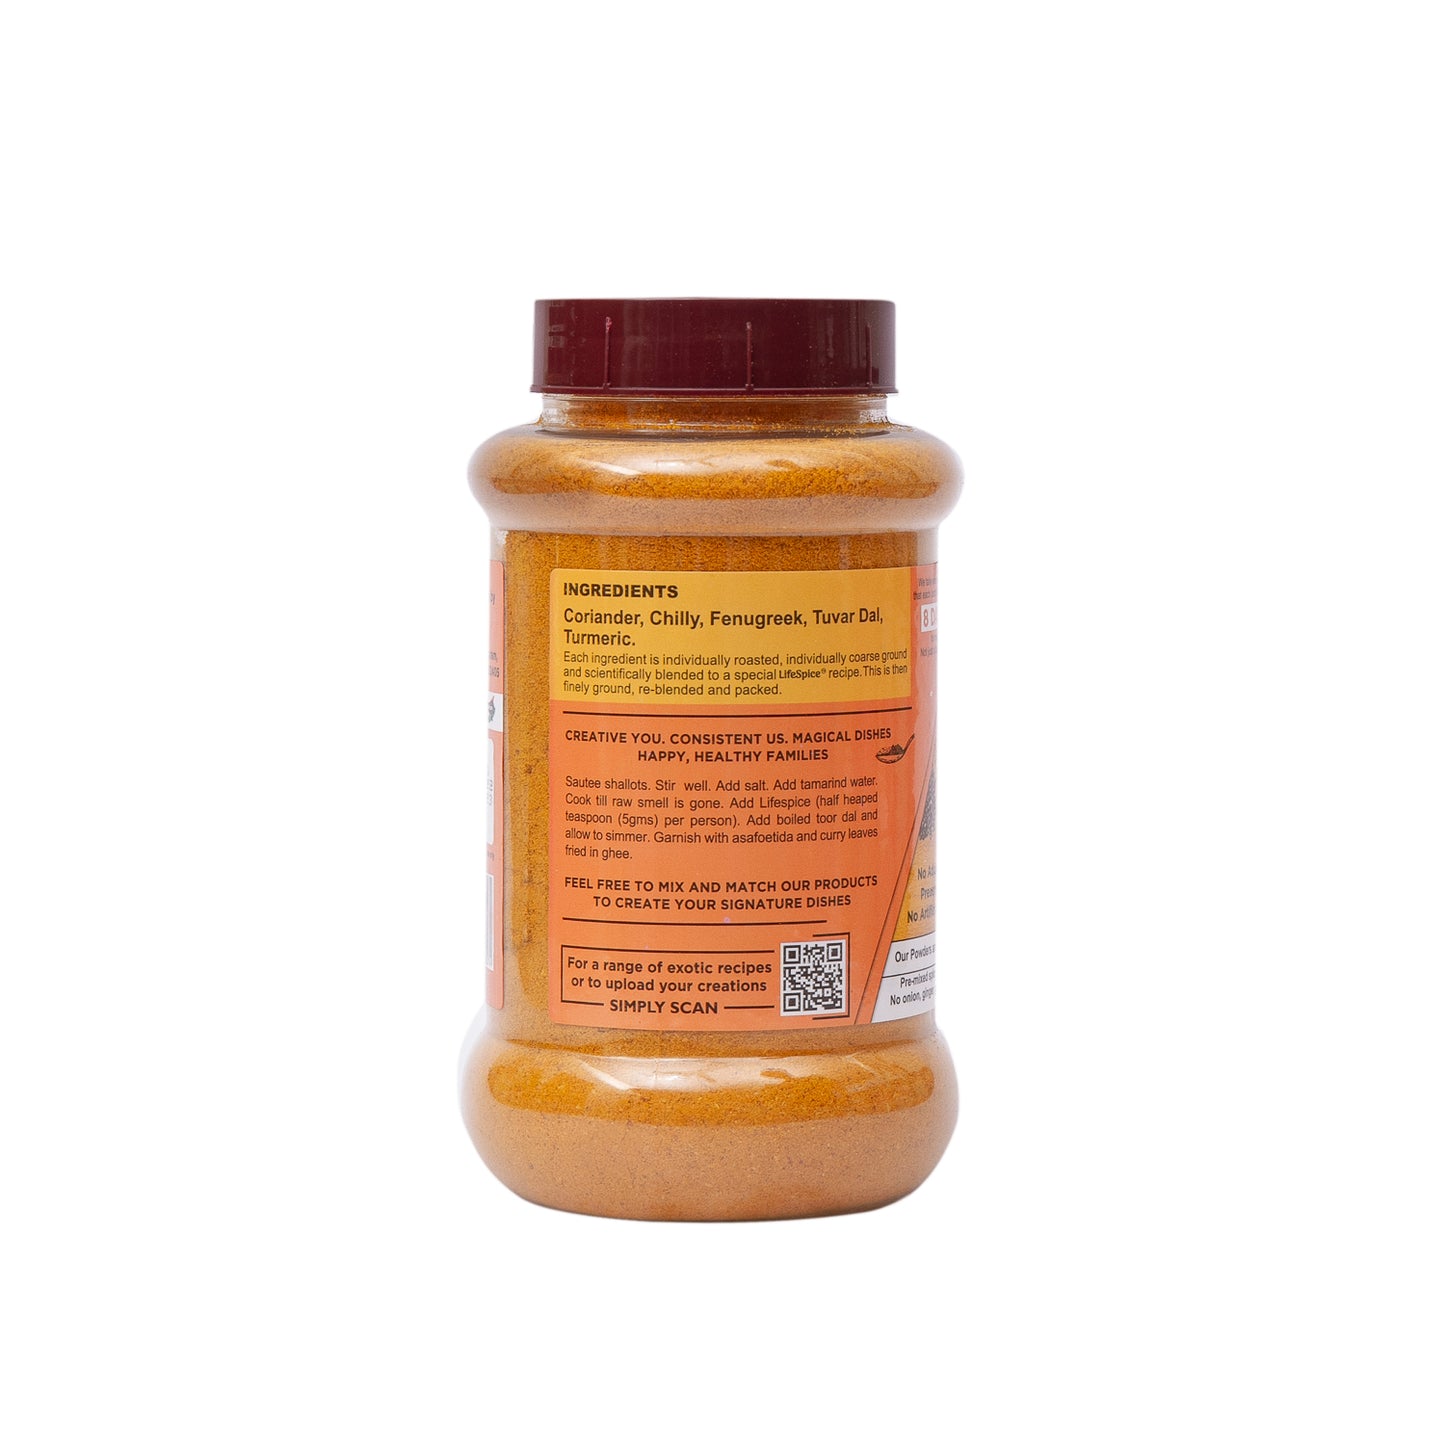 Lifespice - Sambar Powder 200g PET Jar